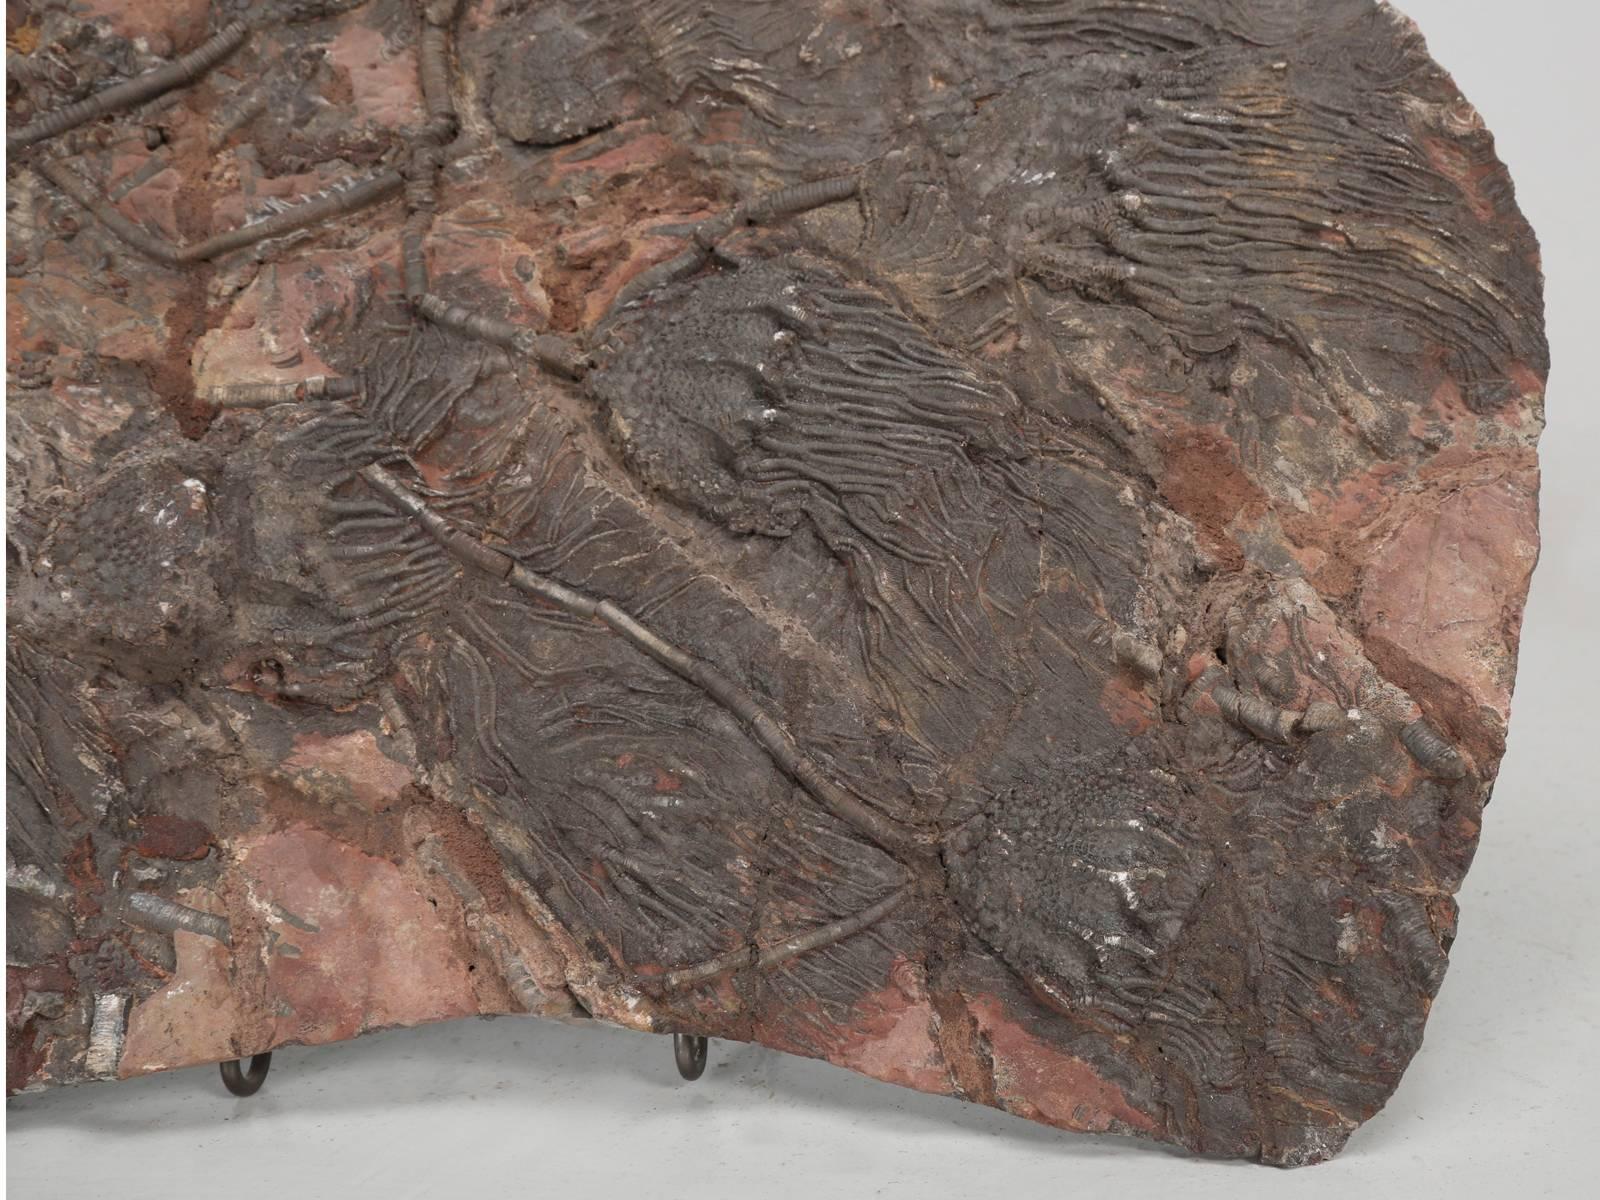 Moroccan Fossil Crinoid or Scyhocrinus Elegans 350 Million Years Old